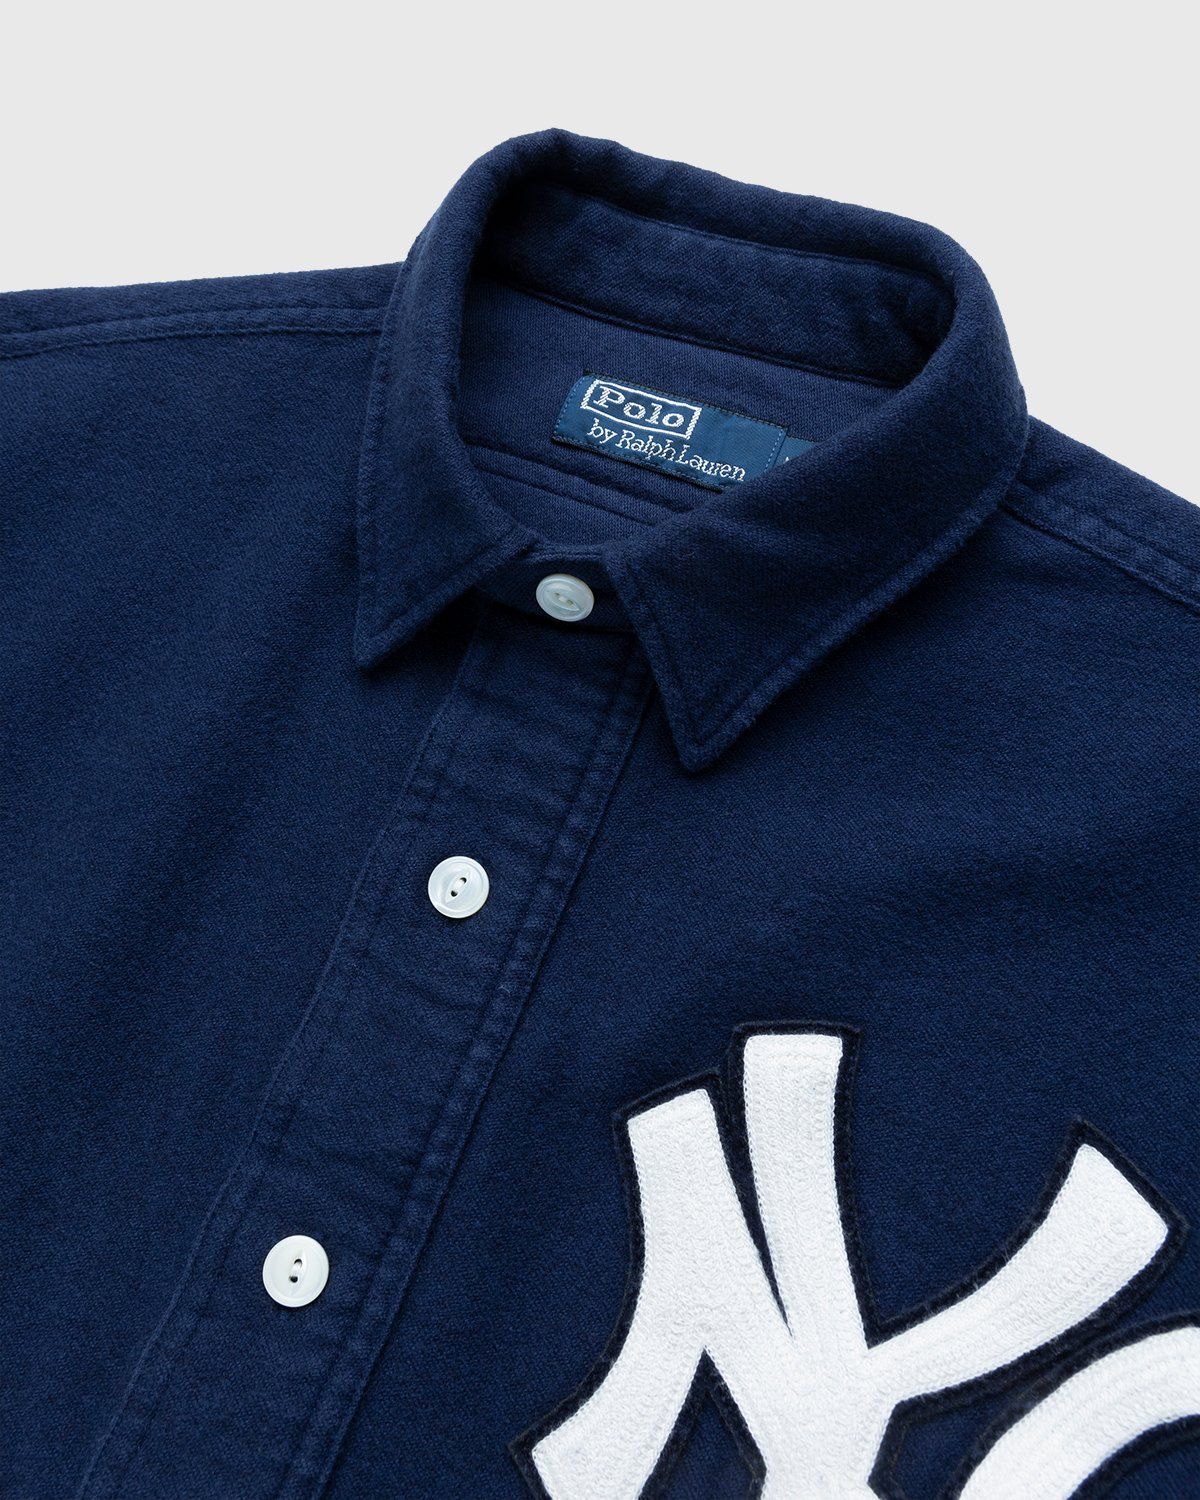 Ralph Lauren – Yankees Popover Shirt Navy - Polos - Blue - Image 3